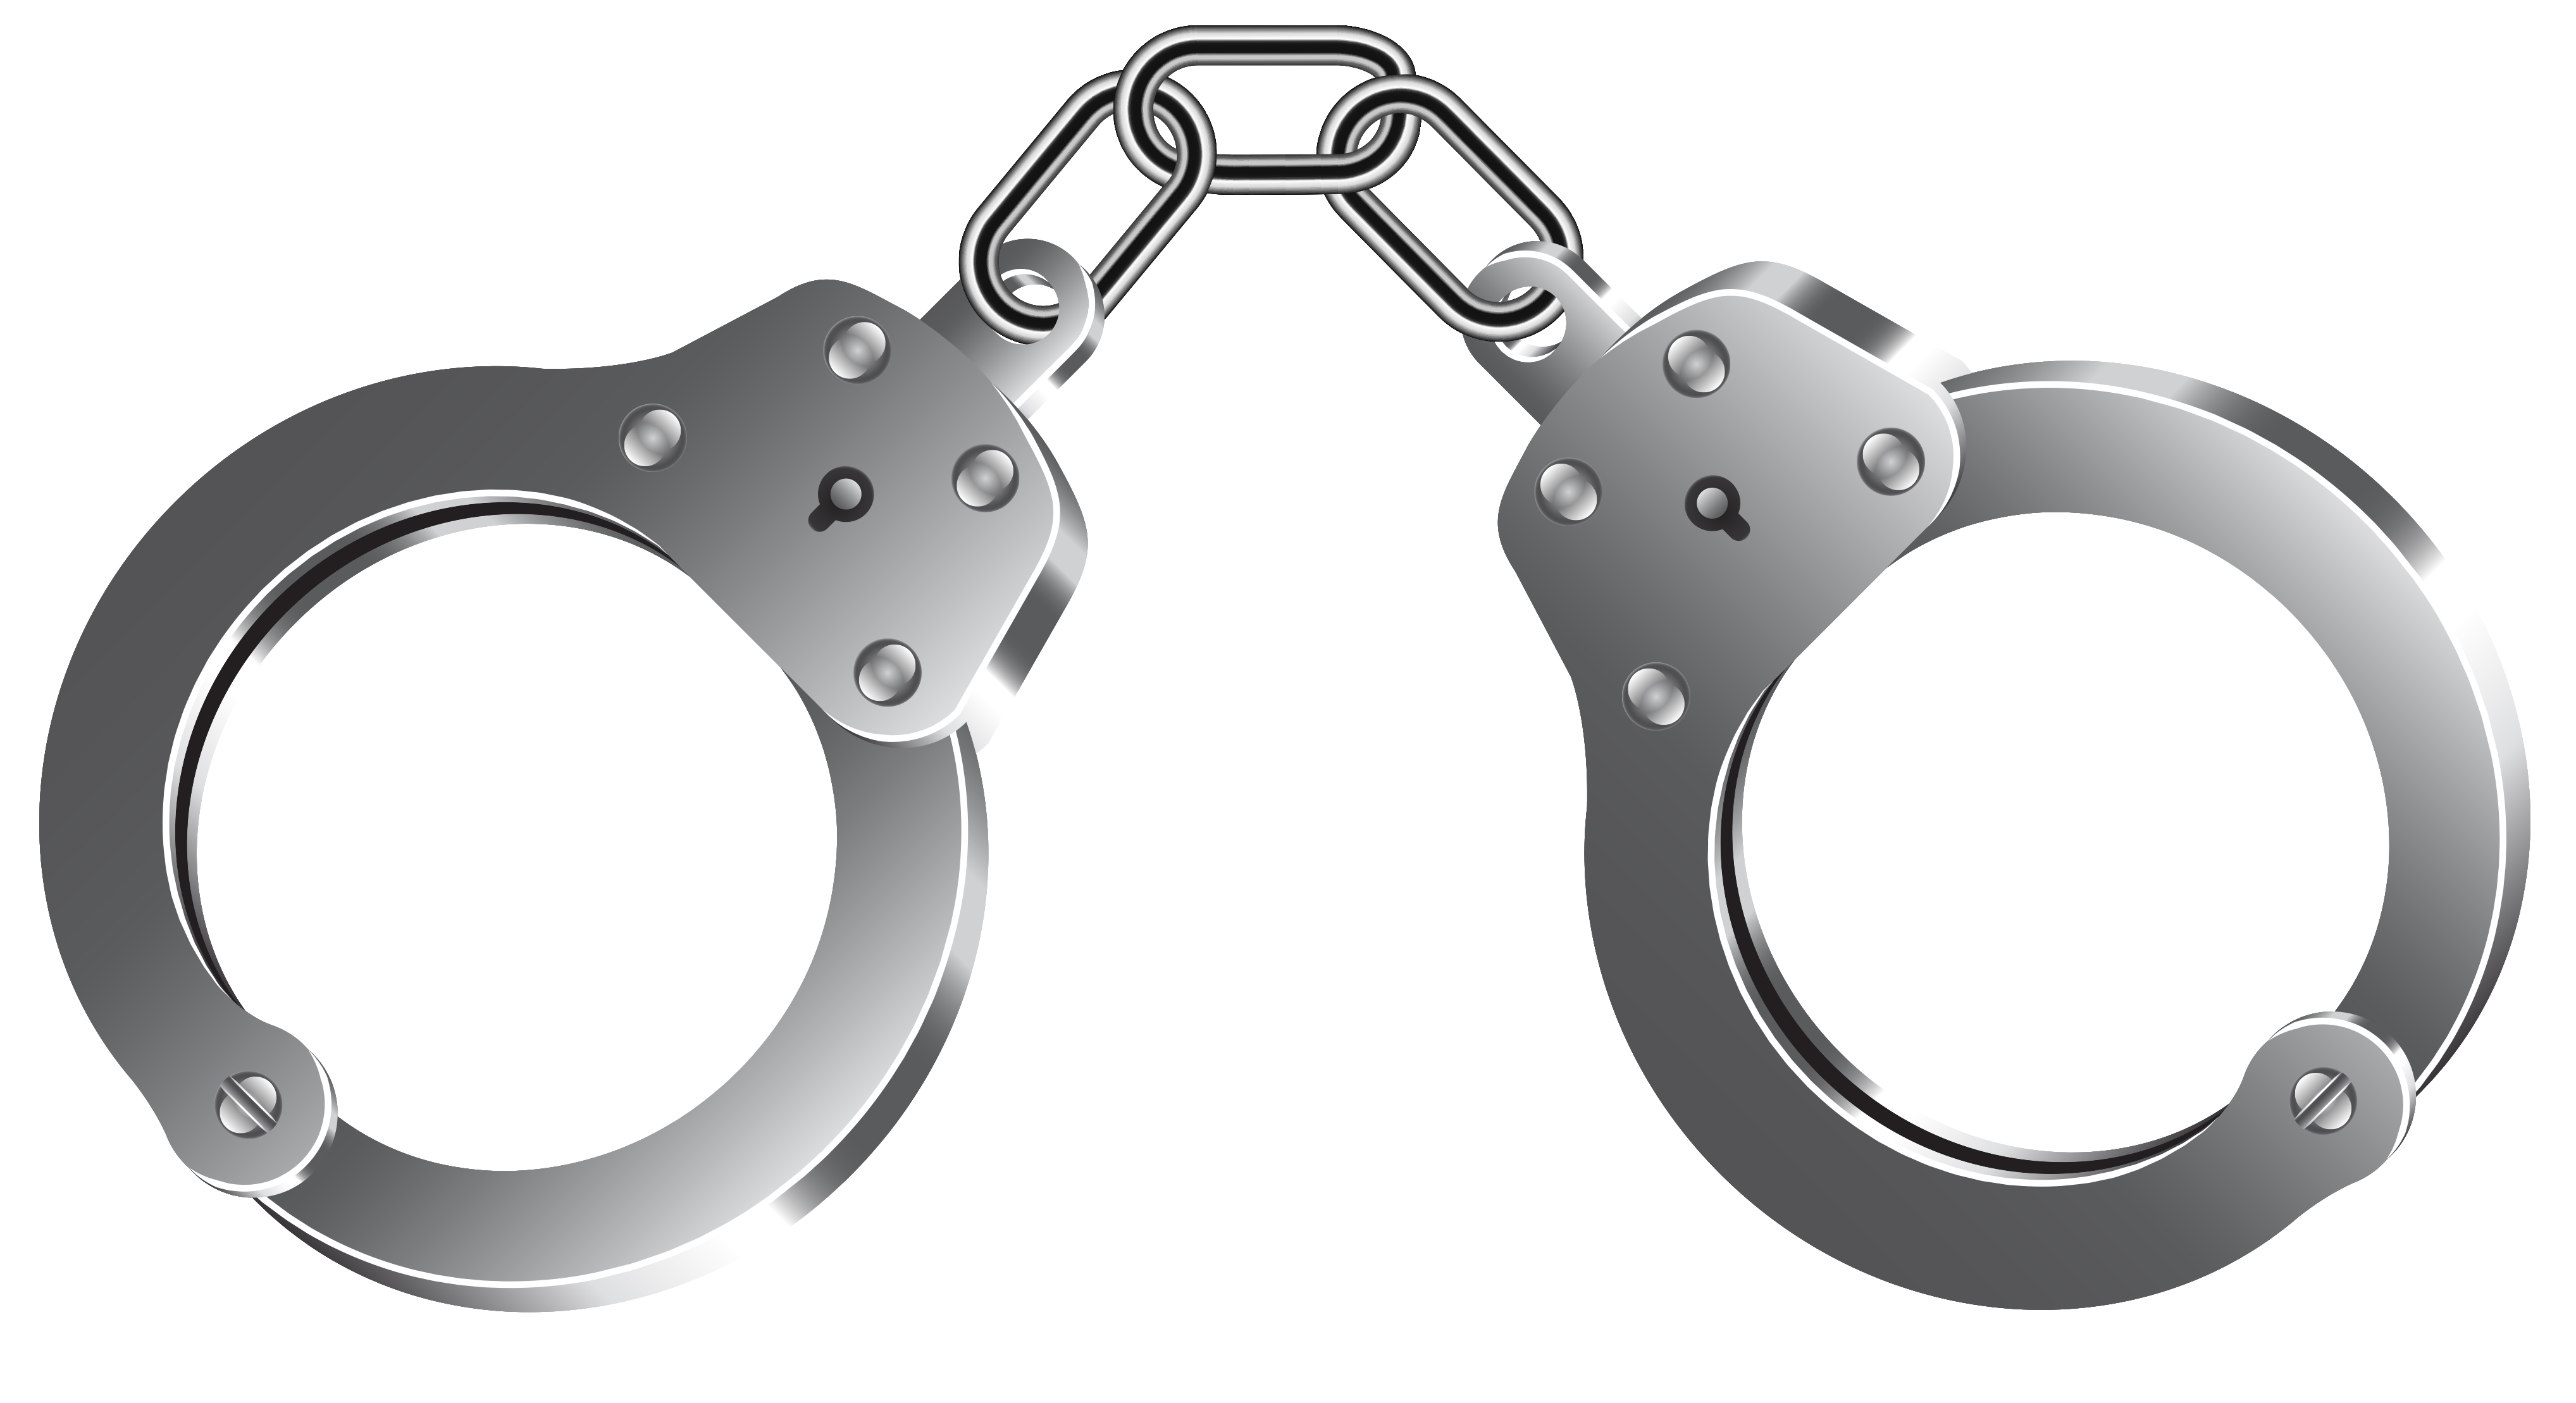 Handcuffs clipart. Png clip art image